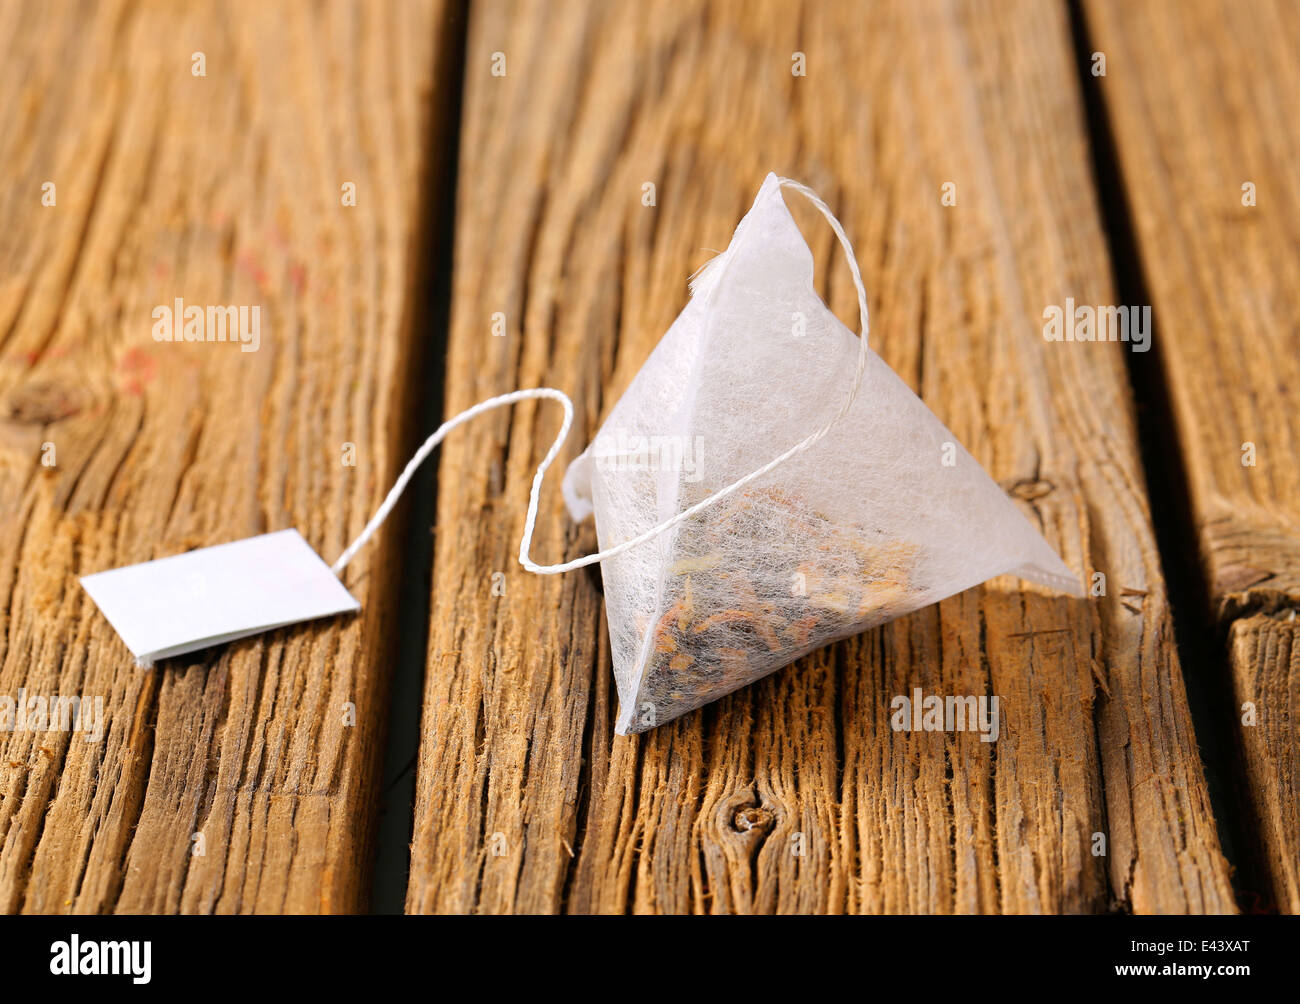 Pyramid-shaped tea bag on wood Stock Photo